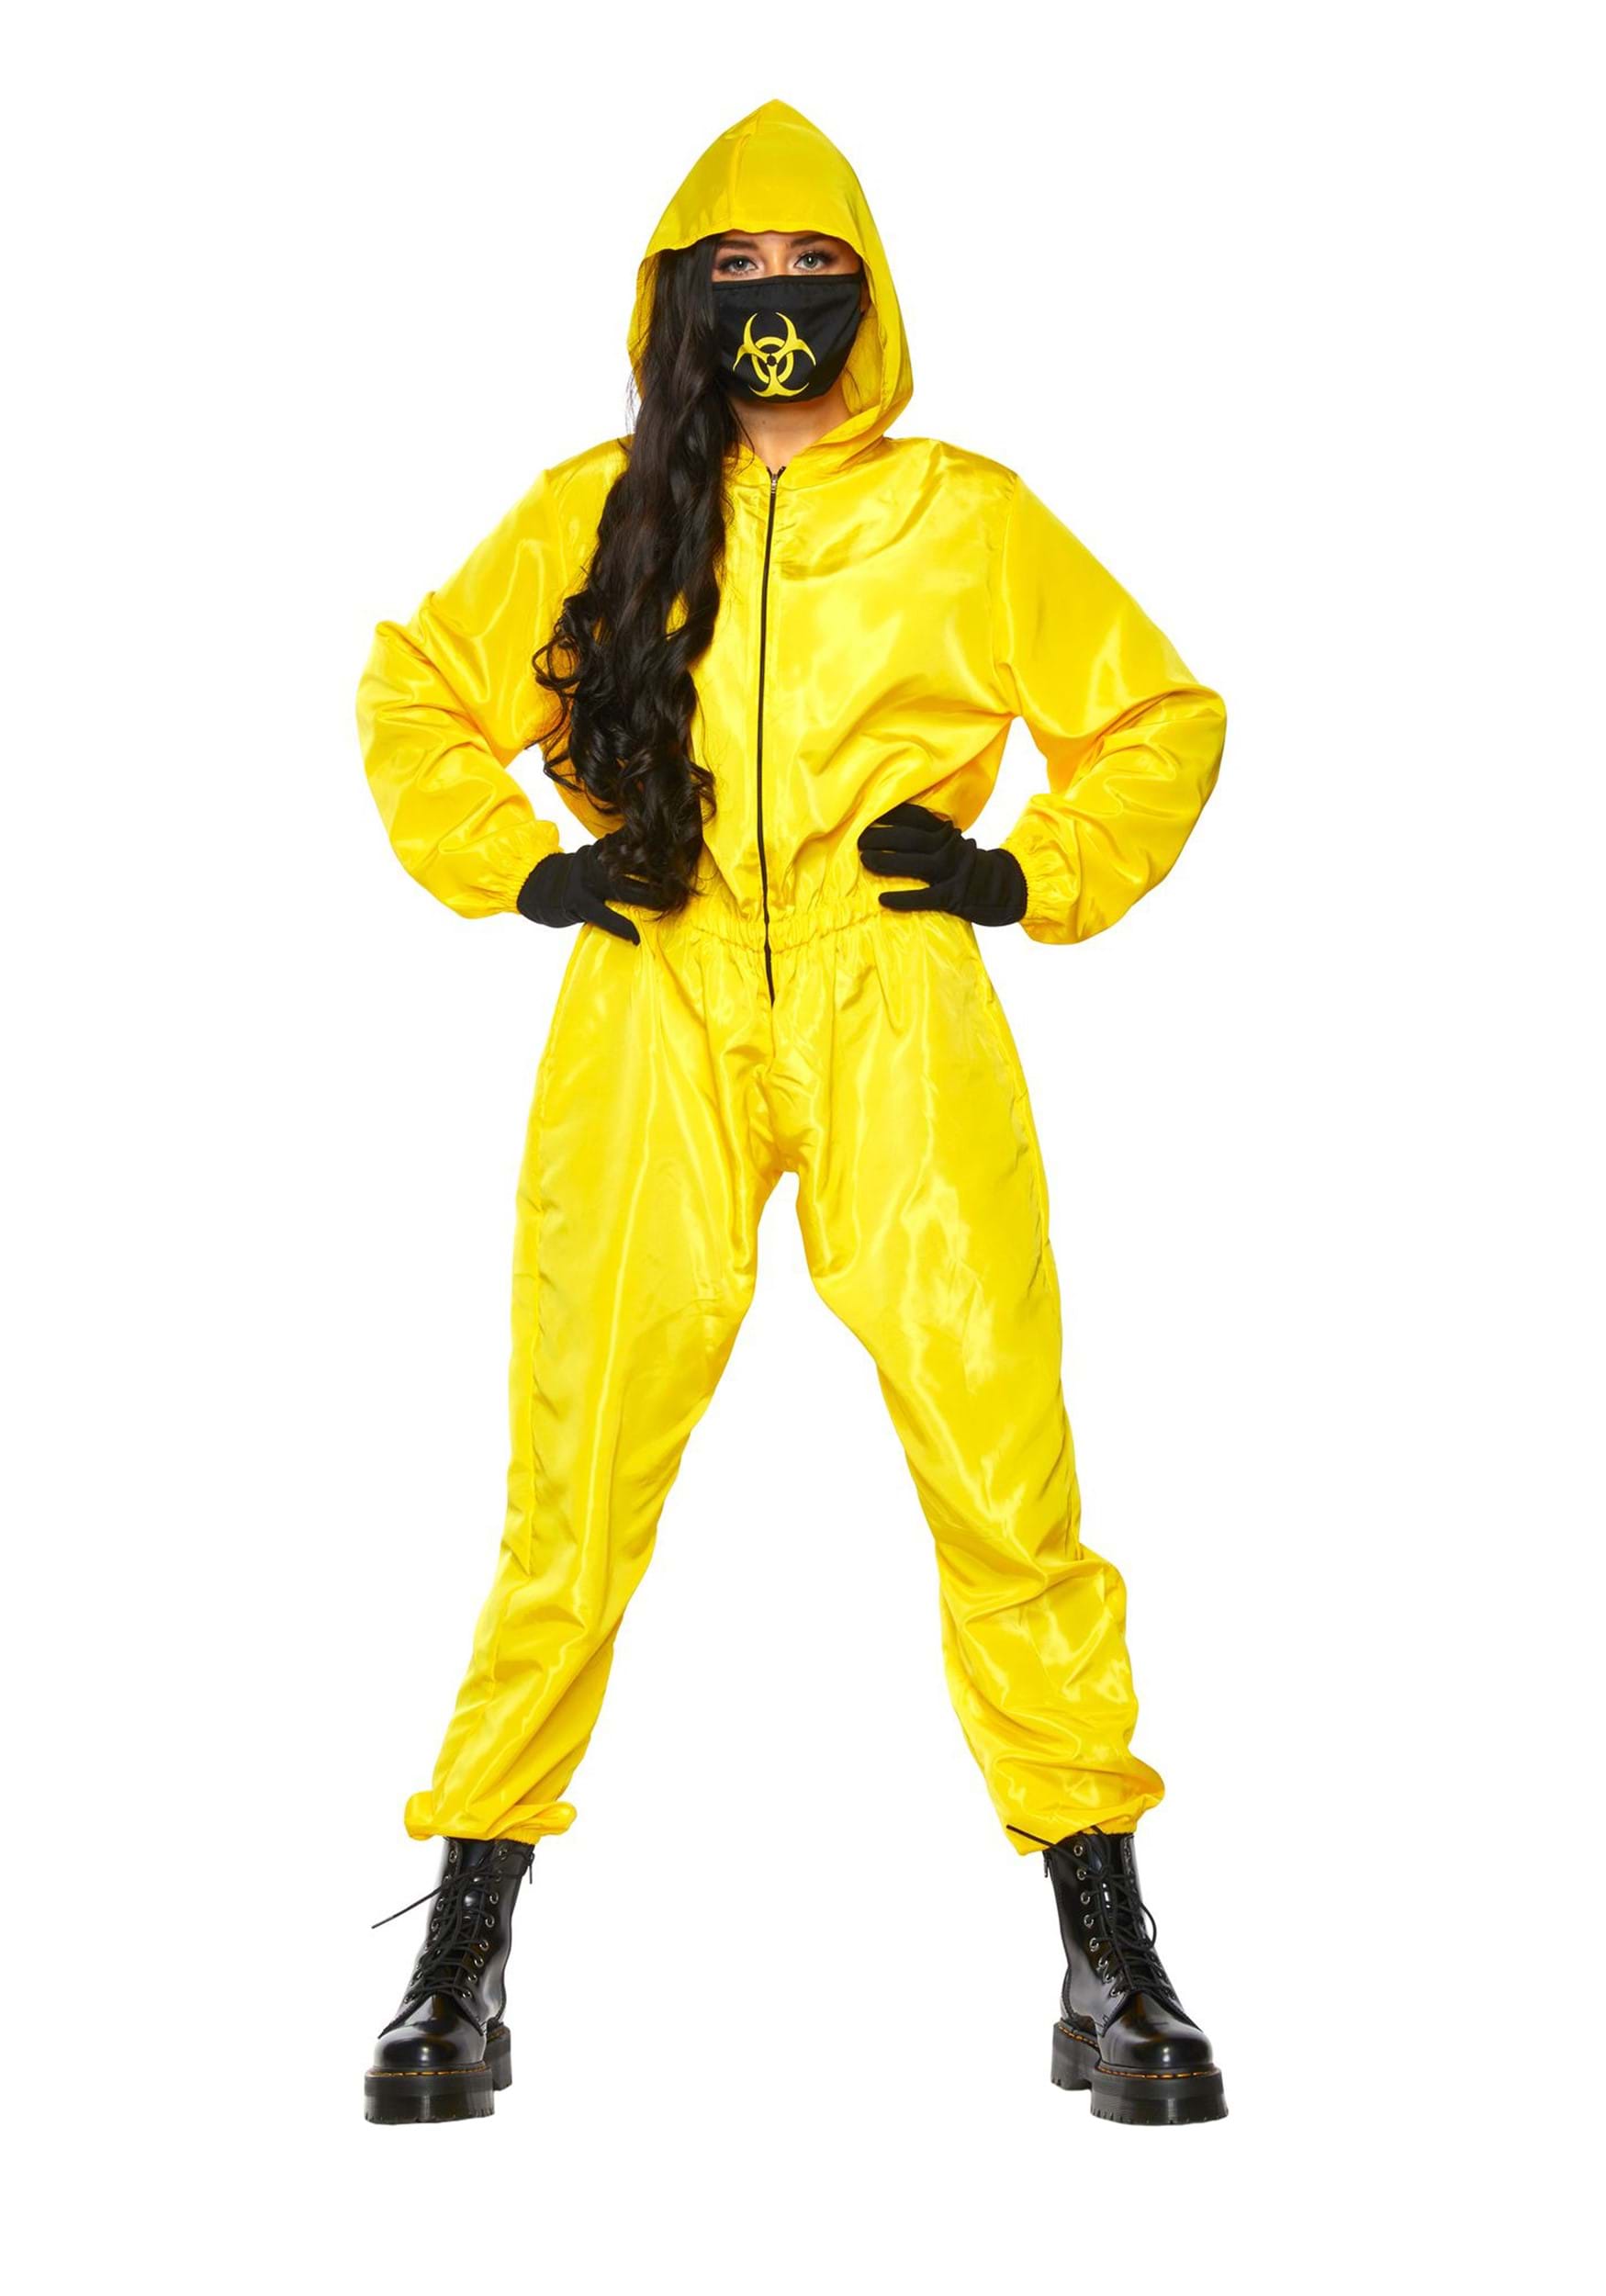 https://images.halloweencostumes.com/products/85933/1-1/womens-yellow-hazmat-suit-costume.jpg